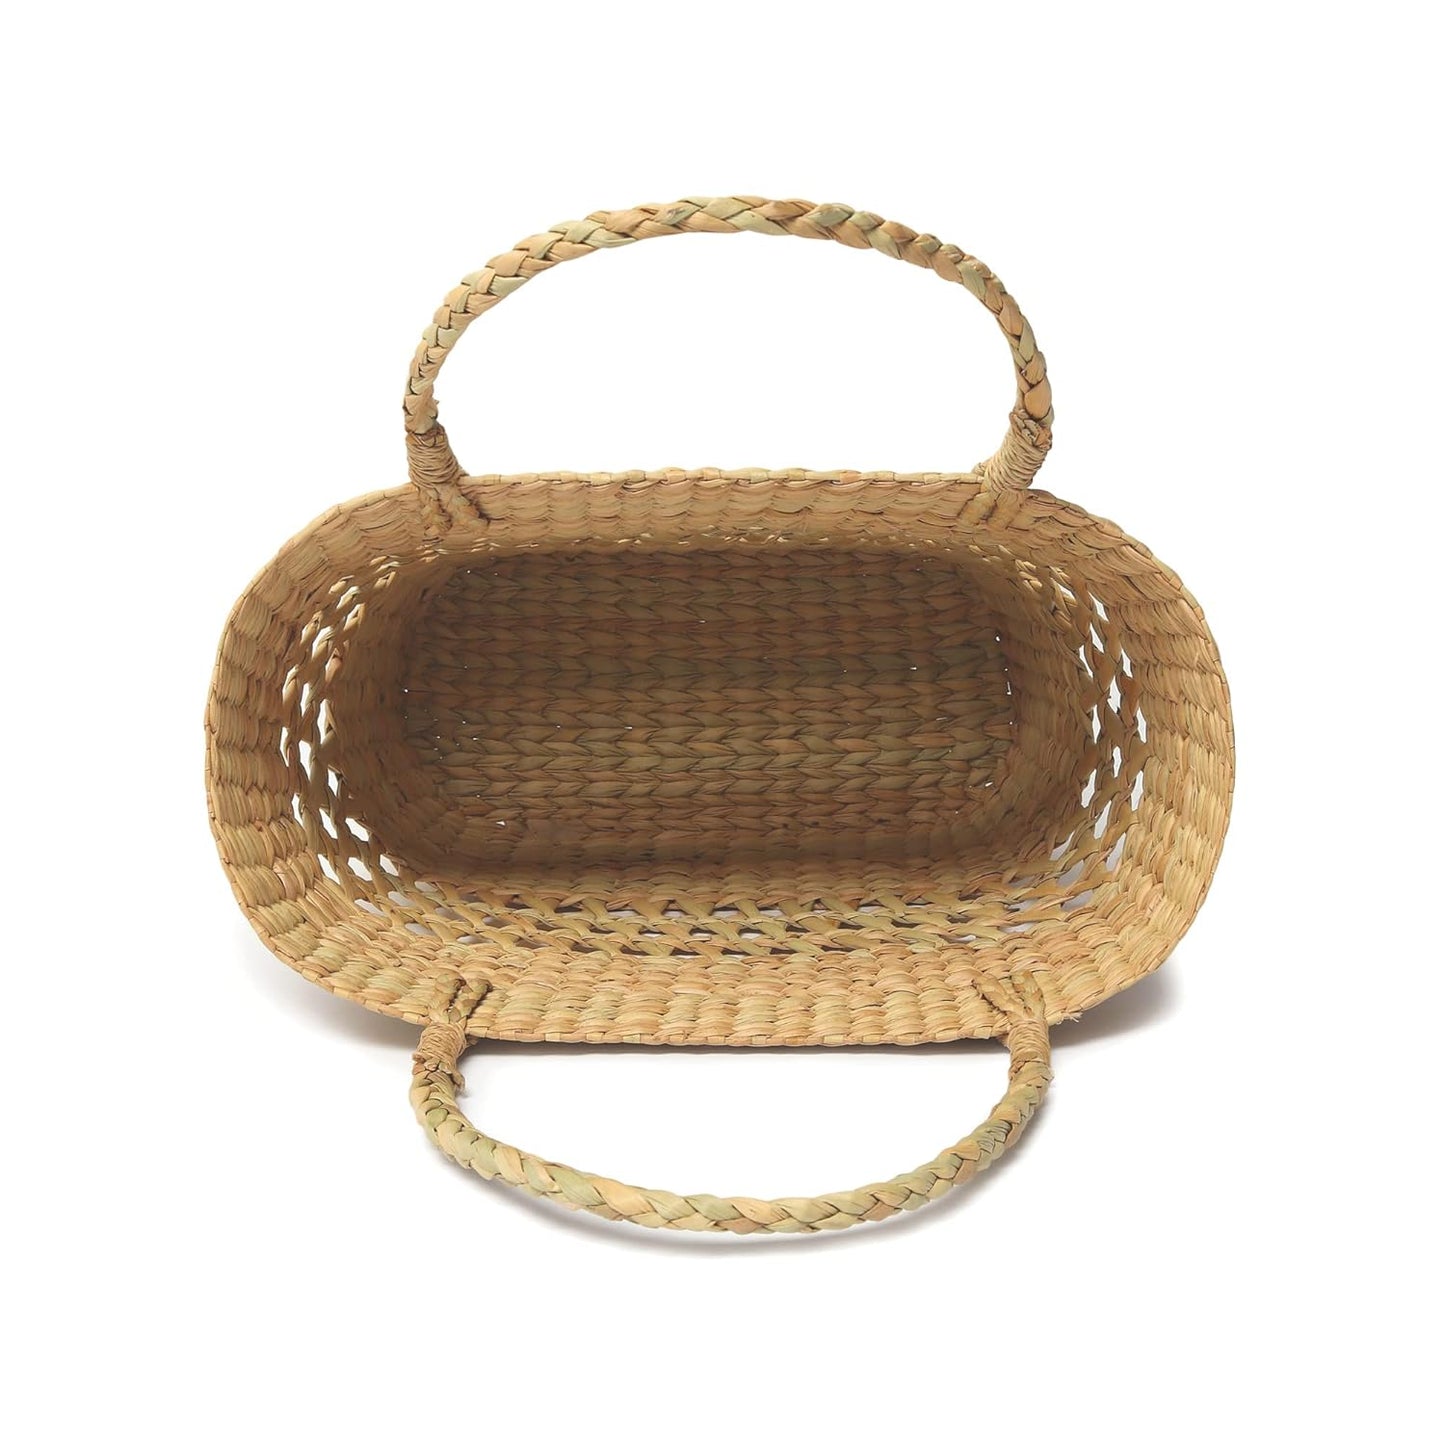 Indian Jute Picnic Baskets Lunch Basket Cane Or Jute Basket Cane Basket For Gifting Wicker Baskets, Beige